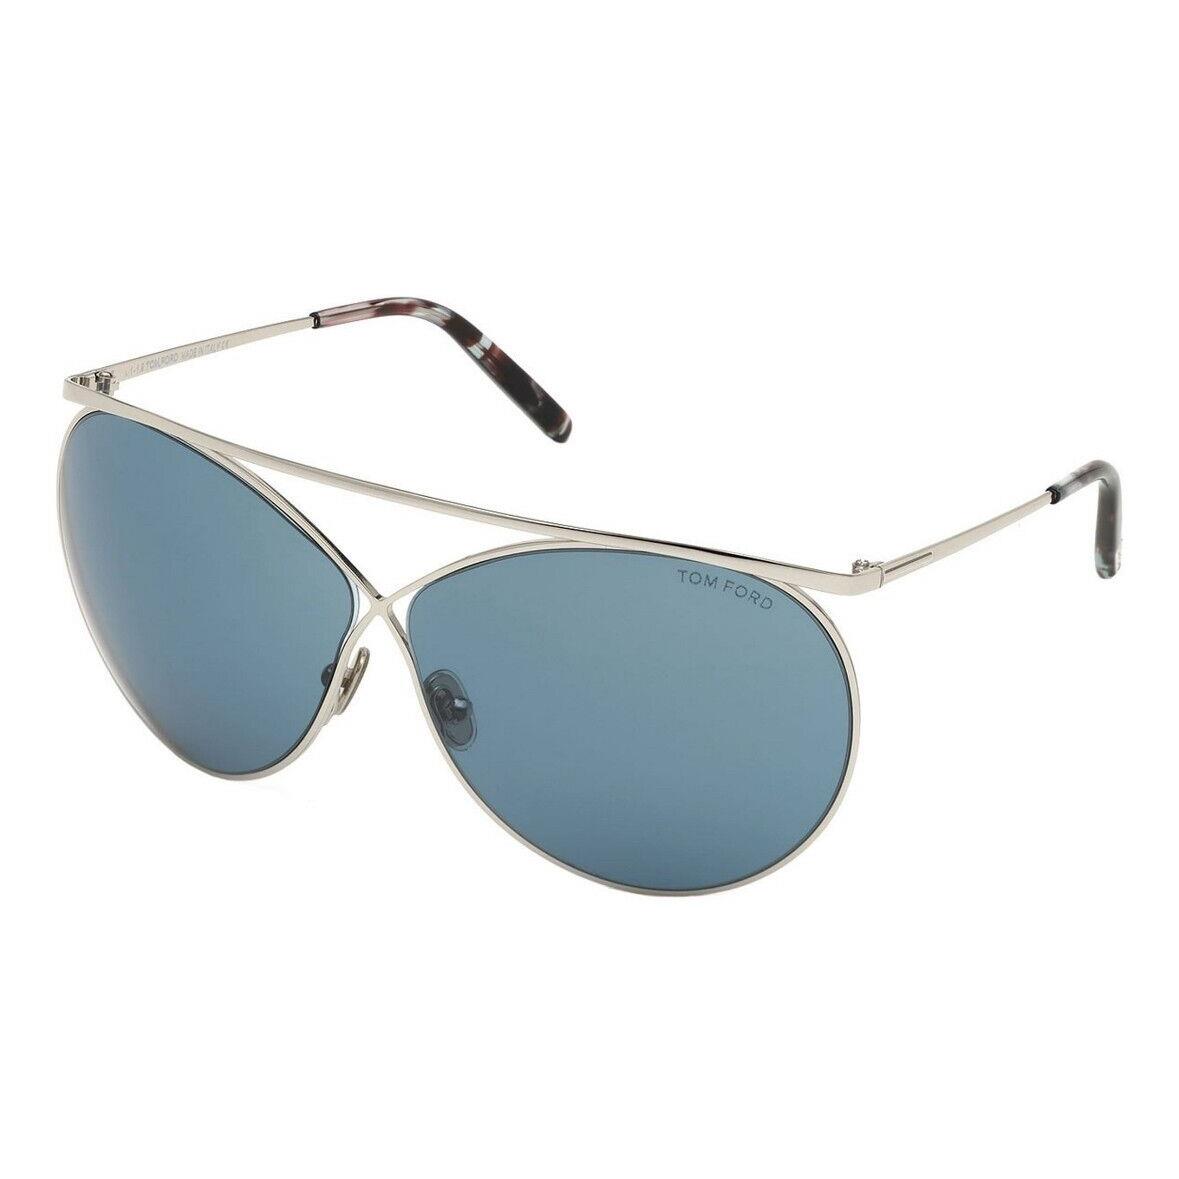 Tom Ford Stevie TF 761 16V Silver/blue Women Round Sunglasses 67mm 08 130